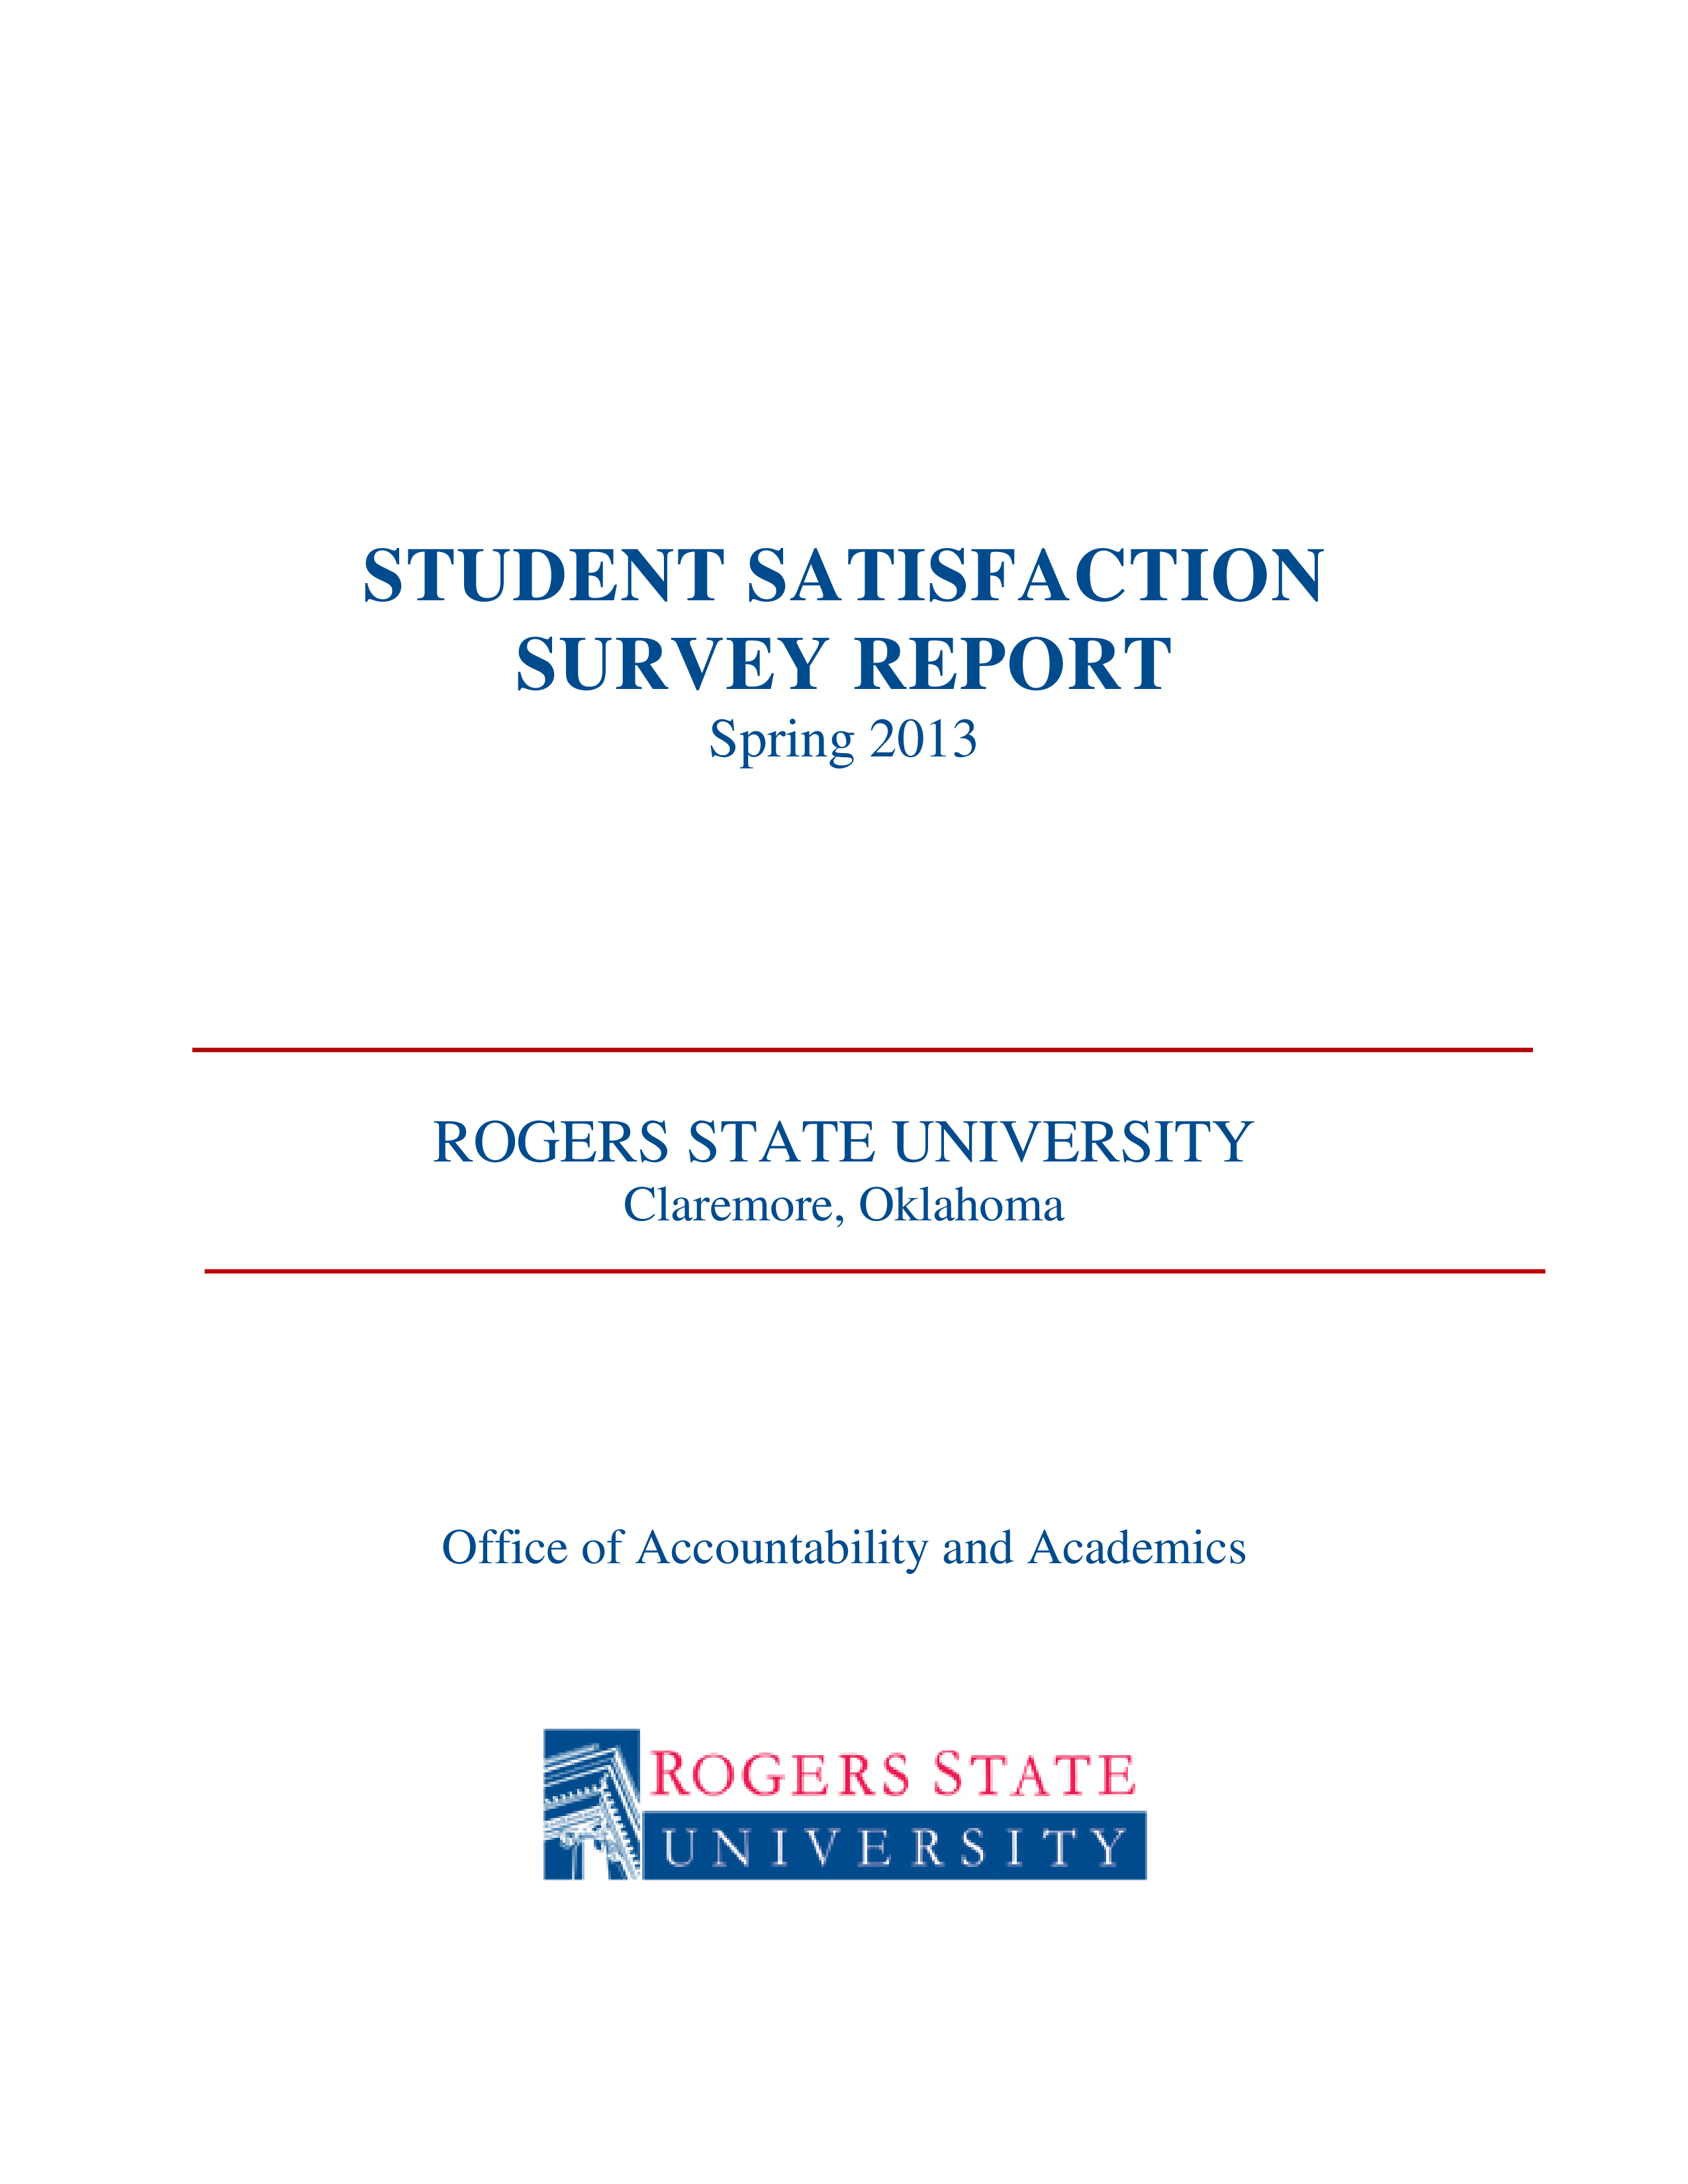 student satisfaction survey report template